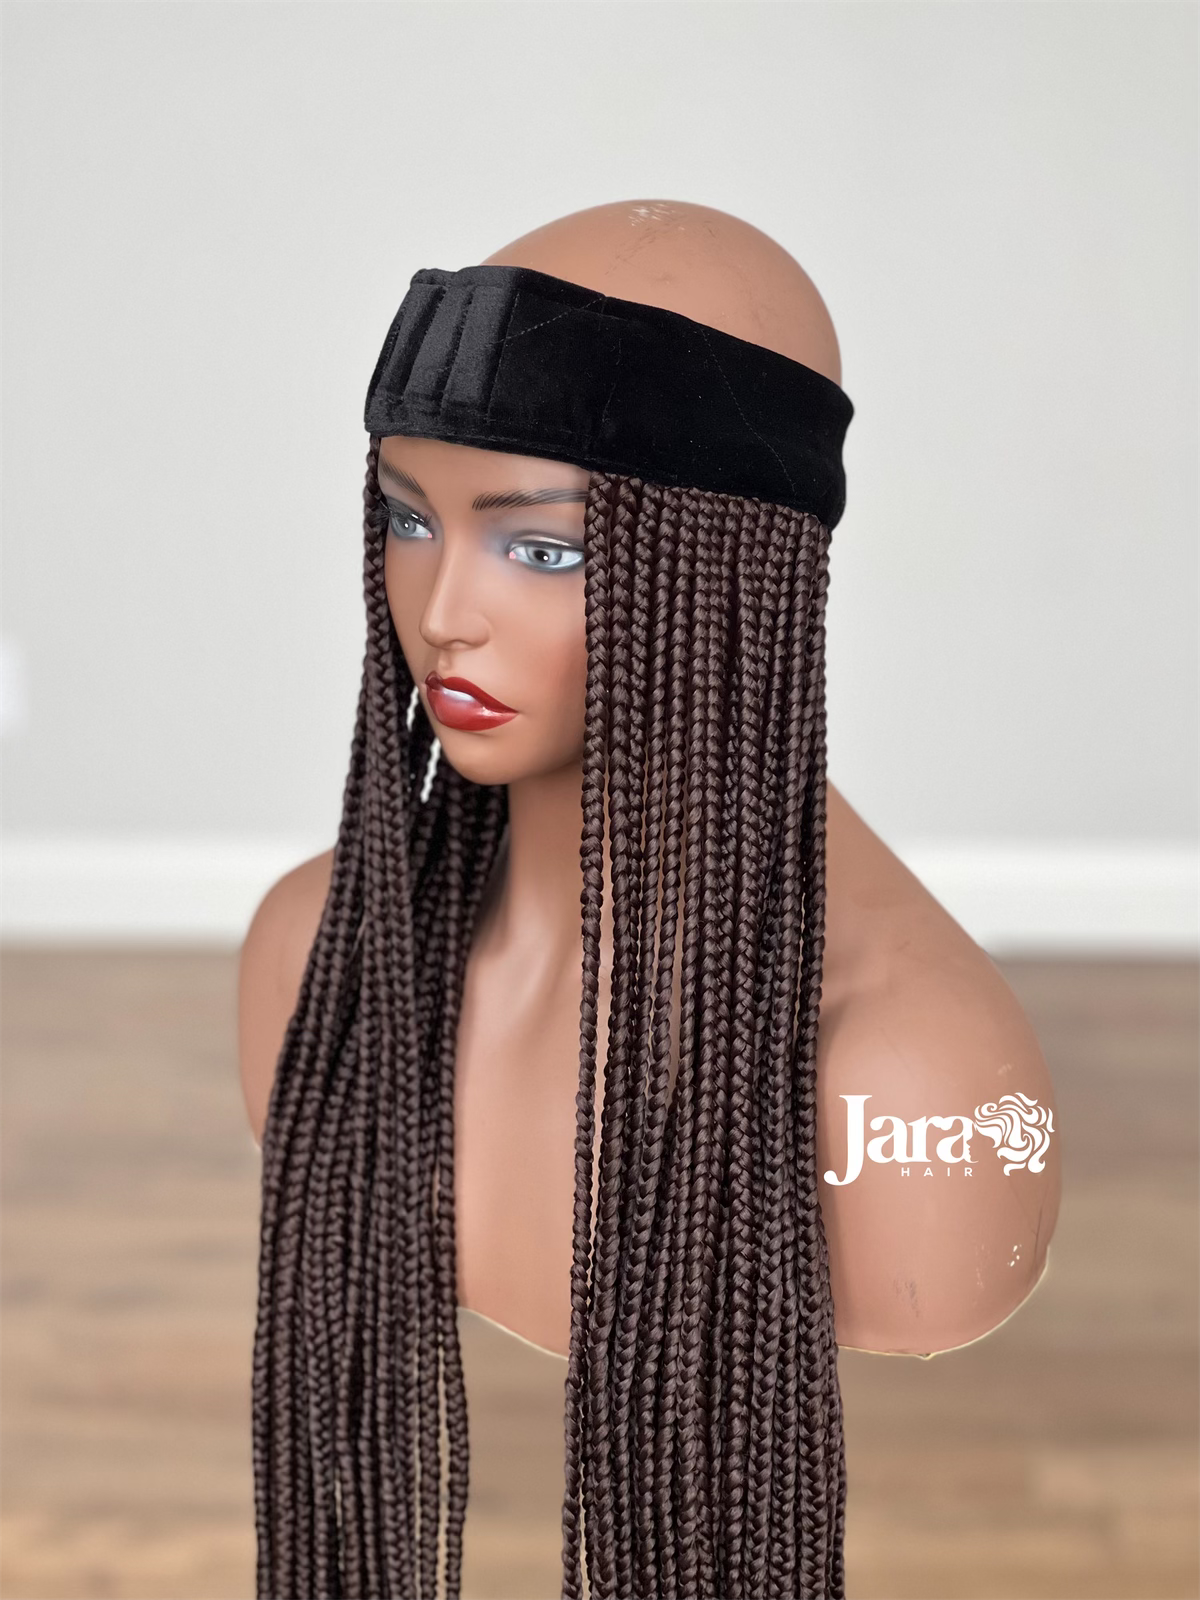 knotless braided wig - Instagram Look - Shop